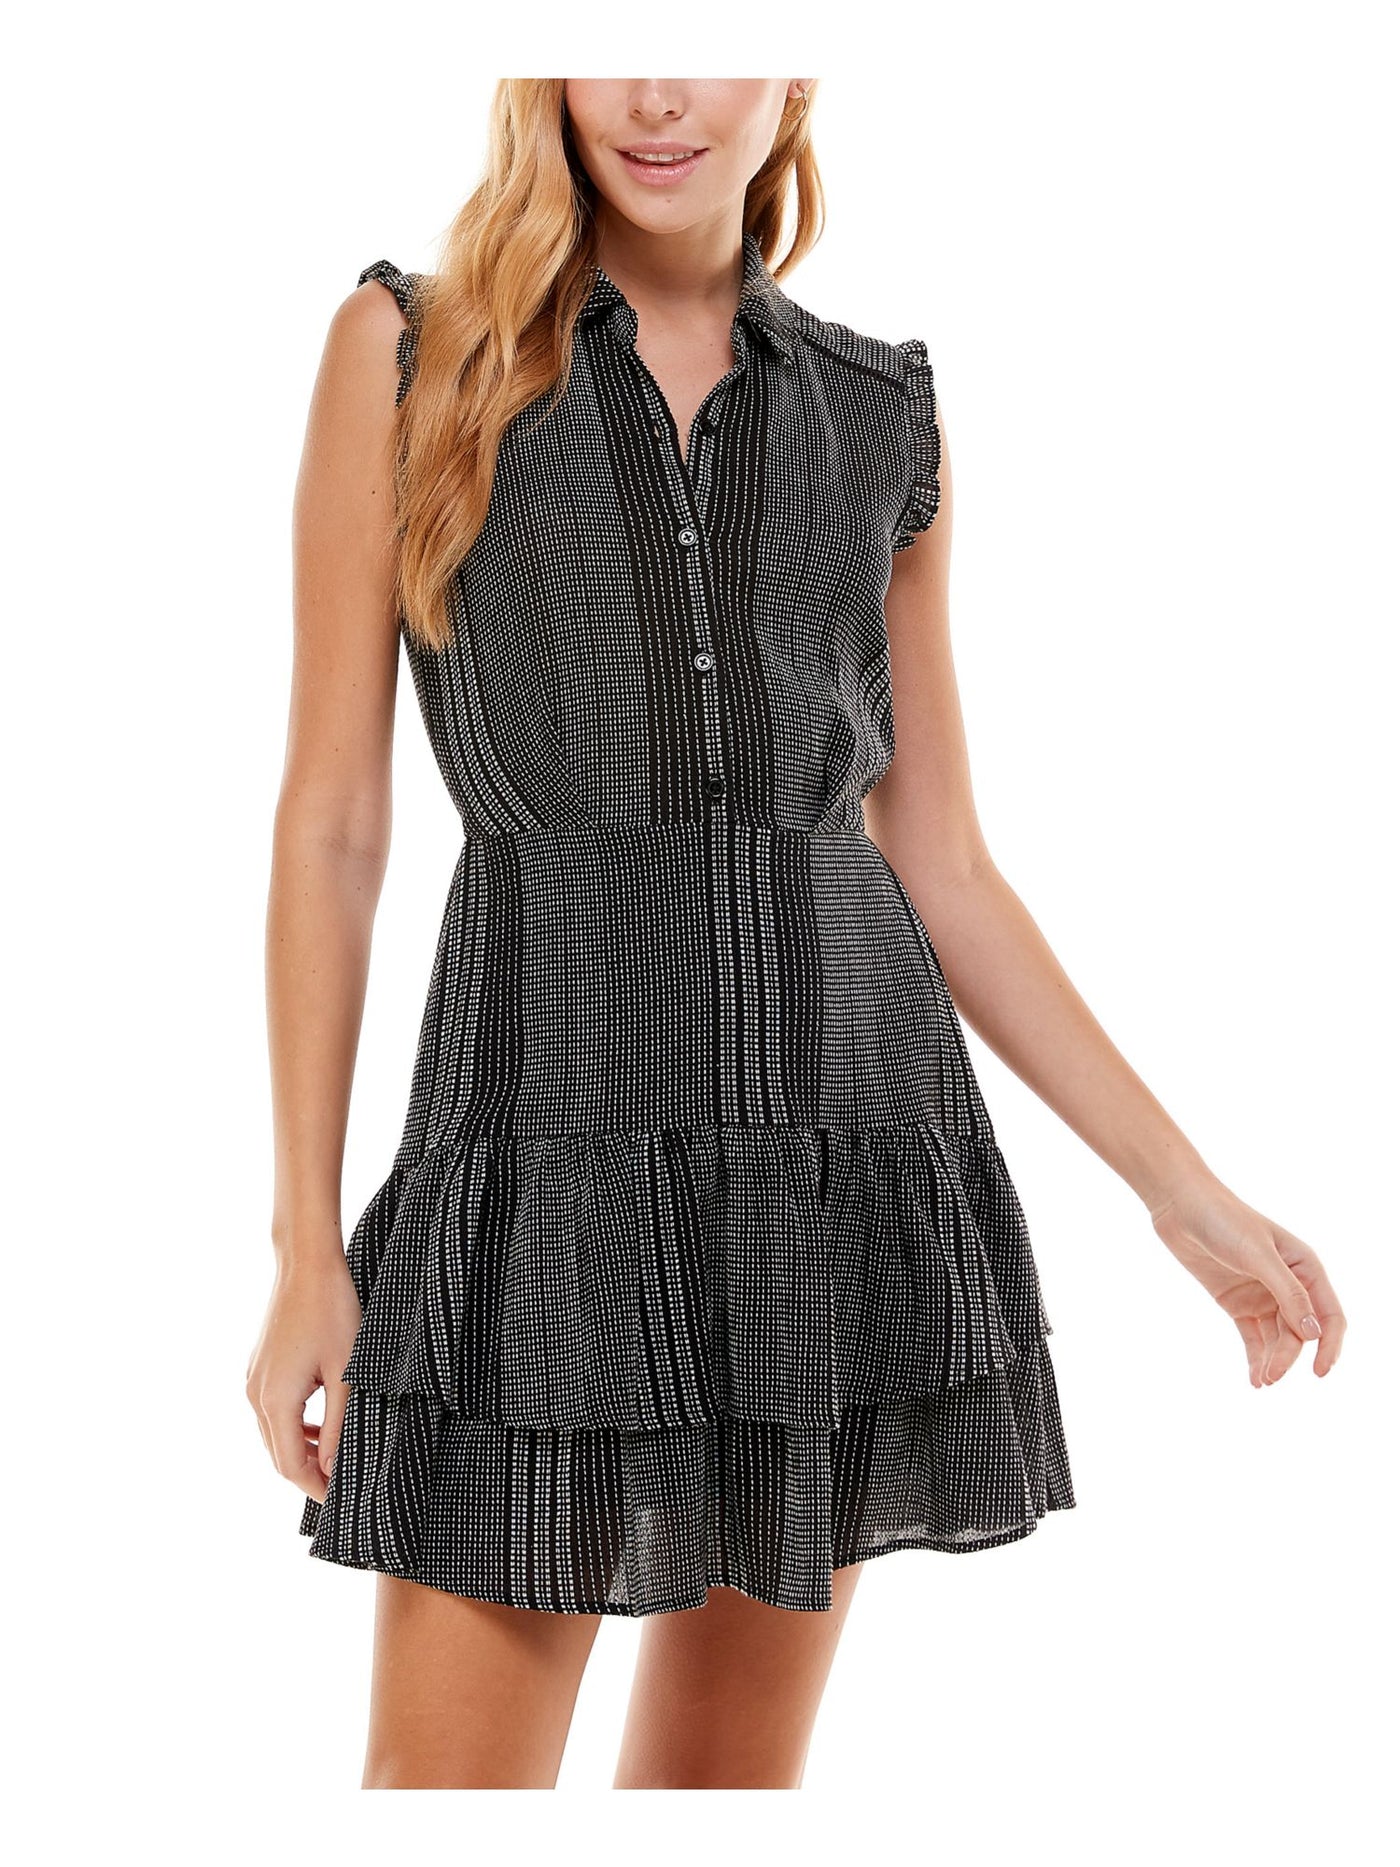 CITY STUDIO Womens Black Ruffled Button Front Striped Sleeveless Collared Mini Fit + Flare Dress Juniors XL